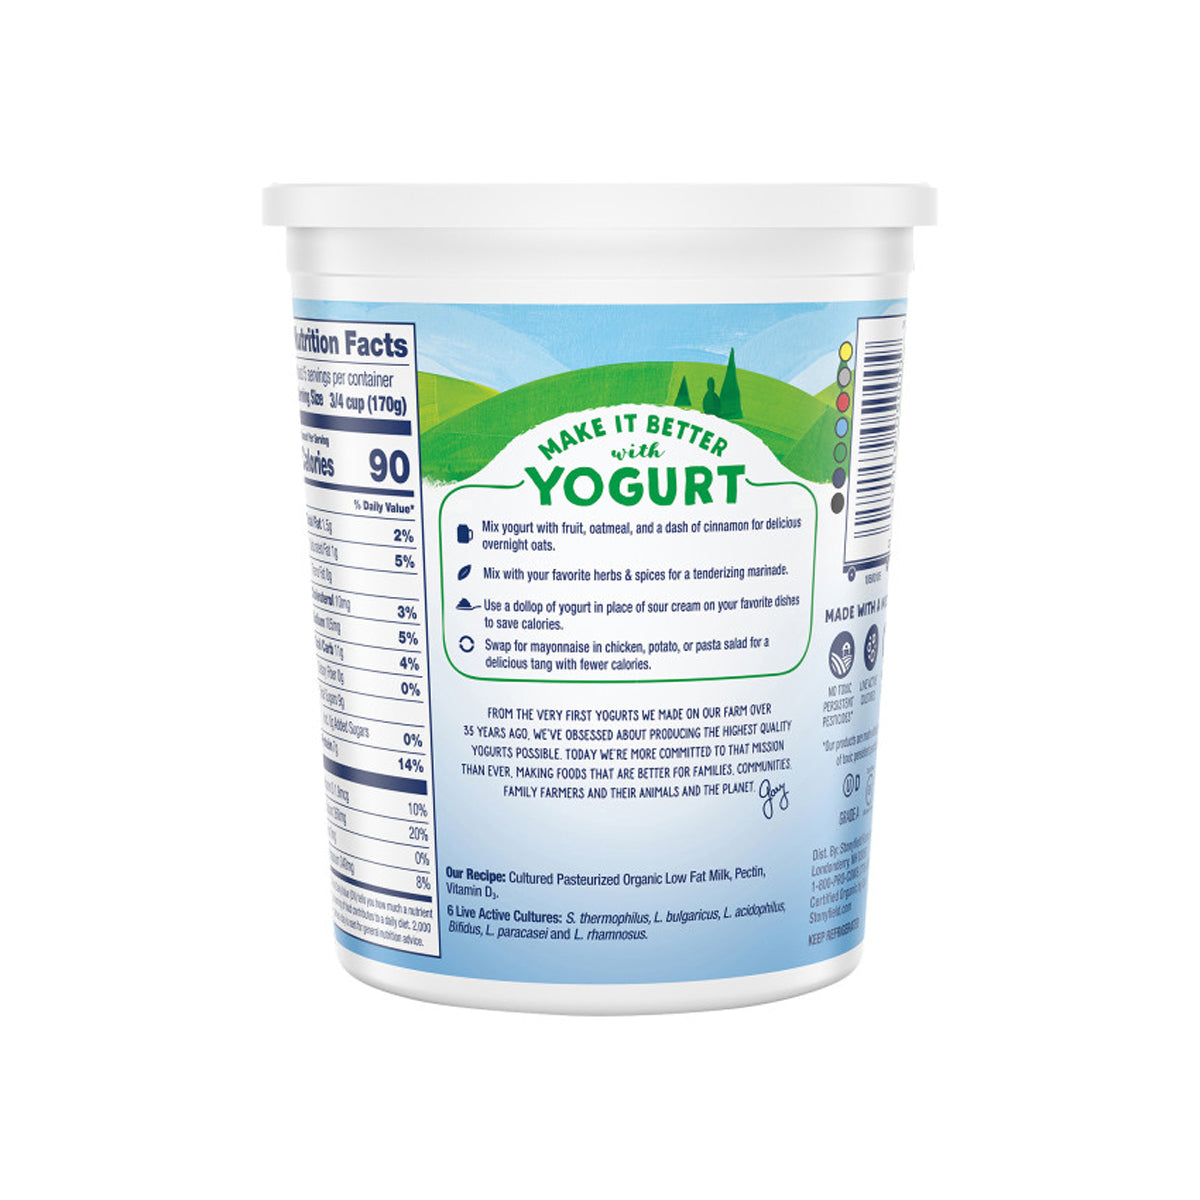 Stonyfield Organic Low Fat Plain Yogurt 32 OZ